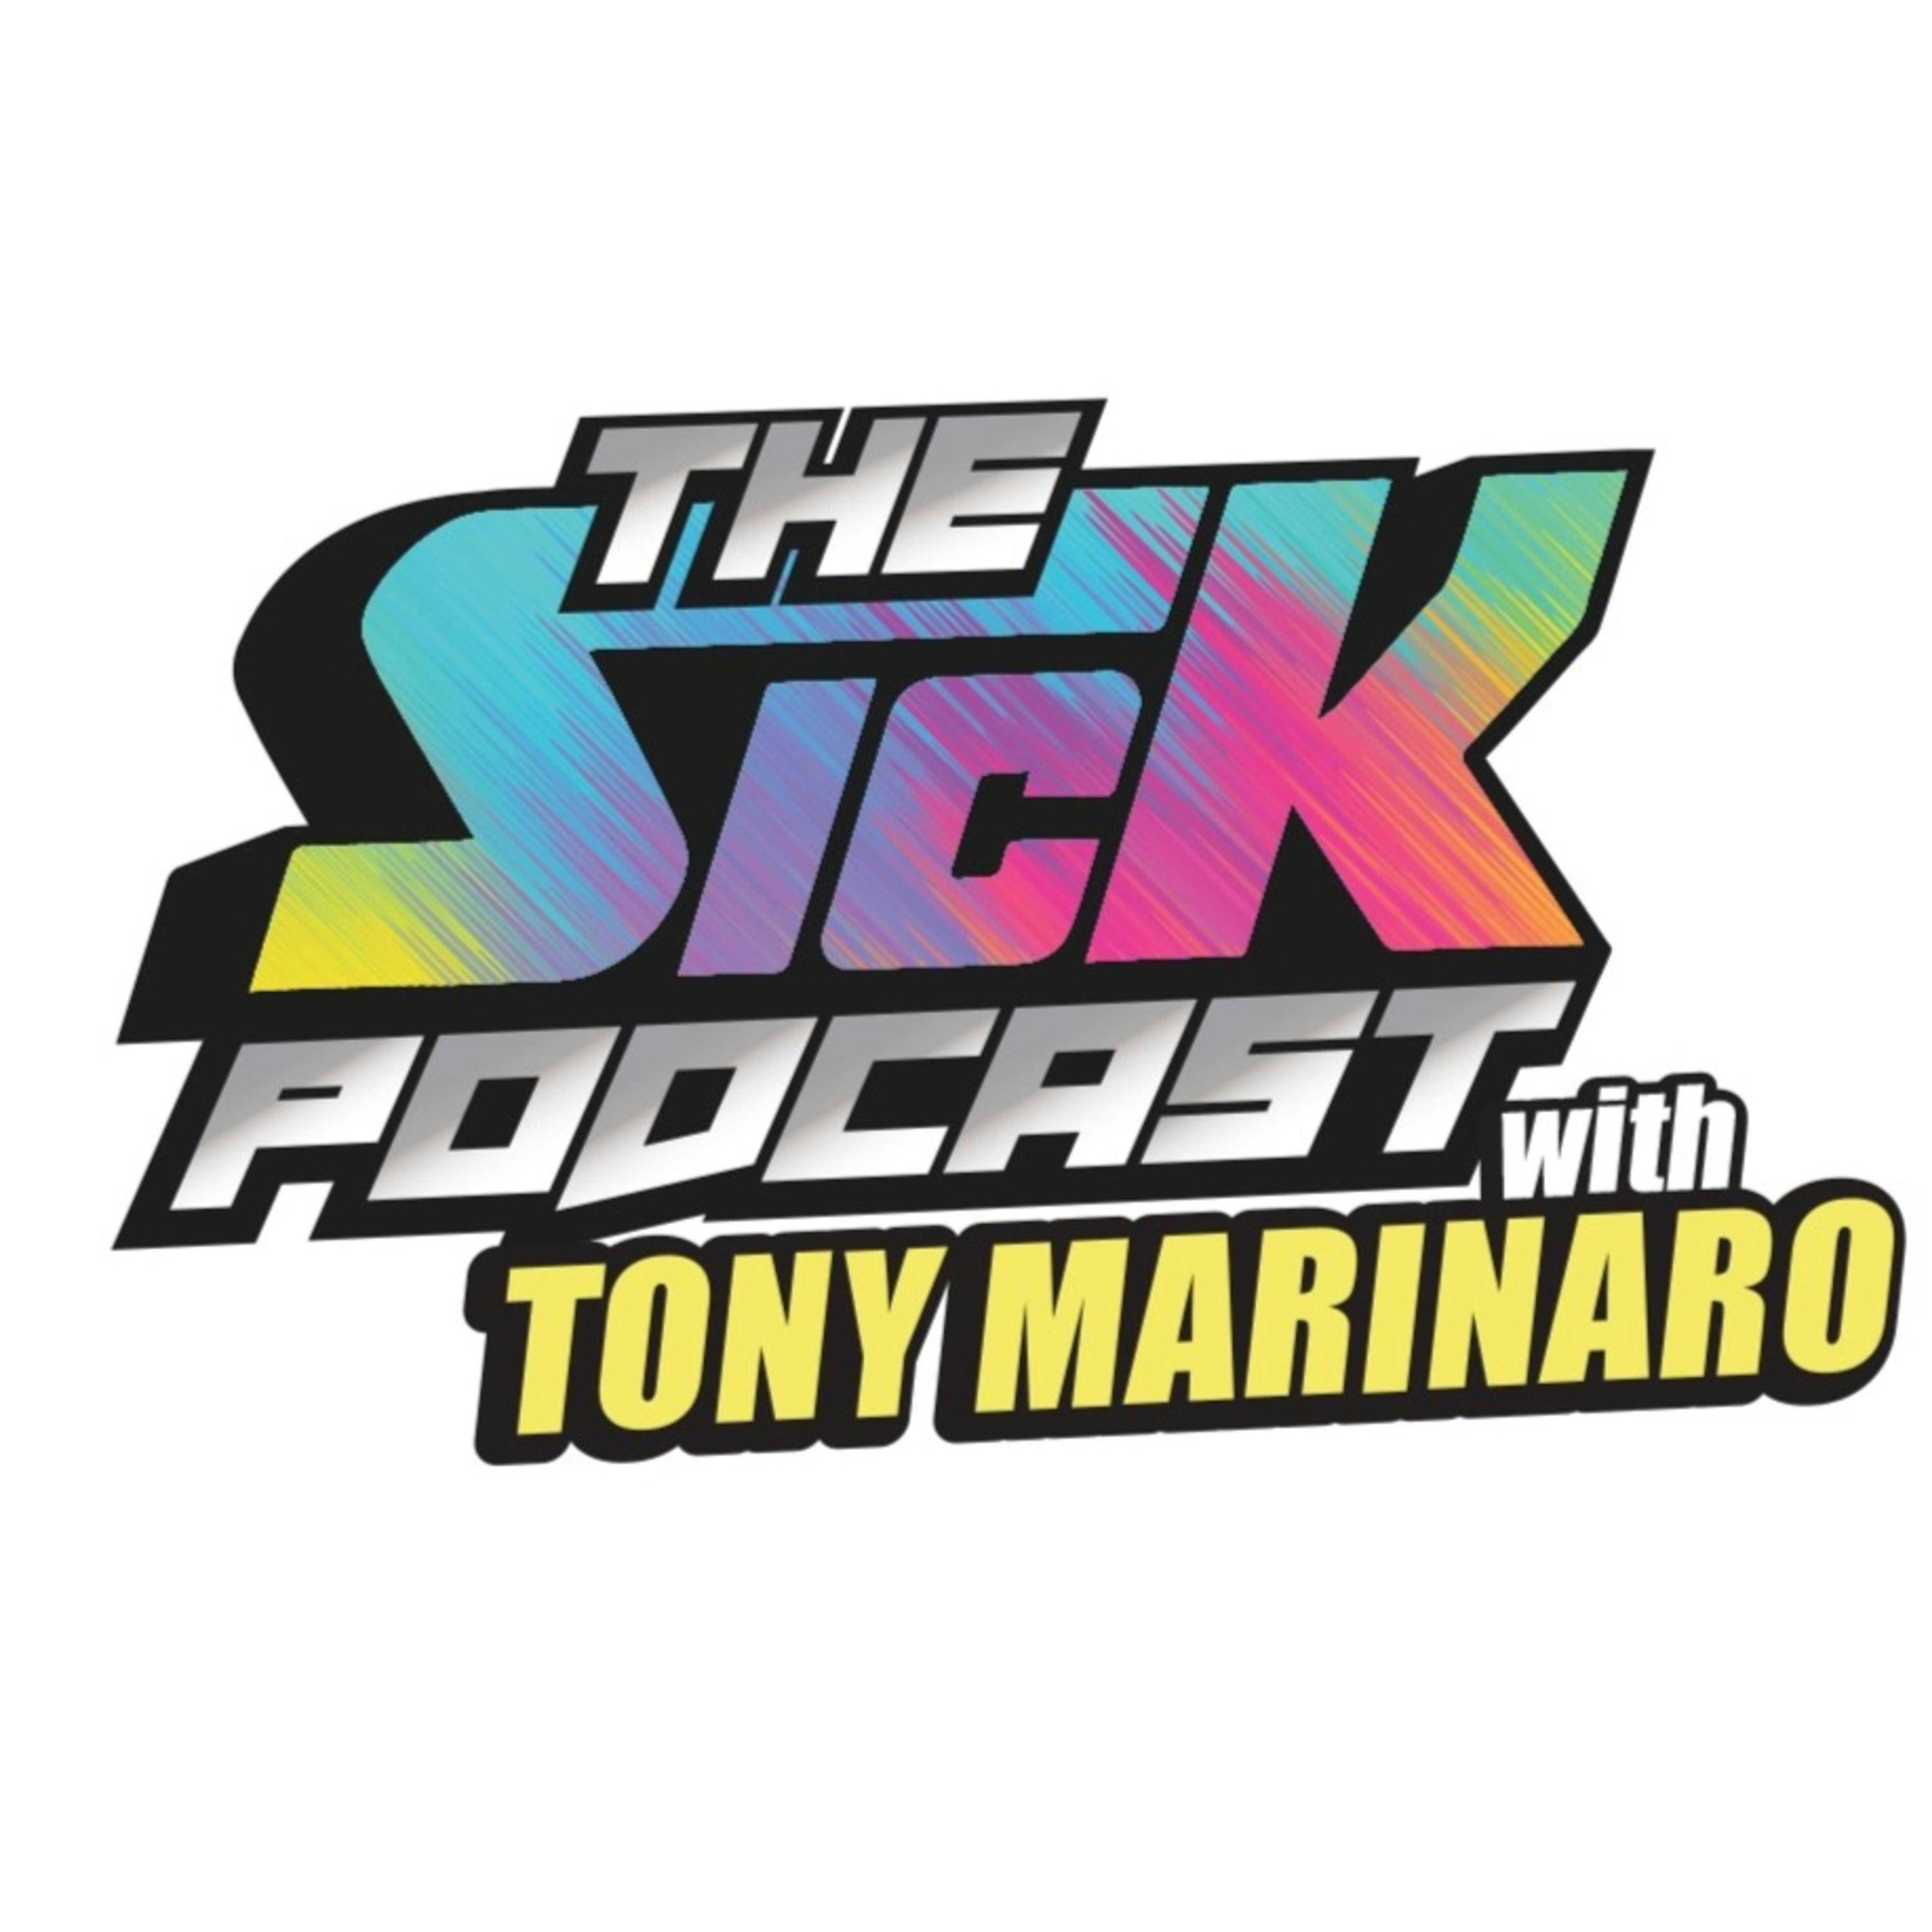 Grant McCagg: Jake Allen Over Sam Montembeault | The Sick Podcast with Tony Marinaro January 26 2023